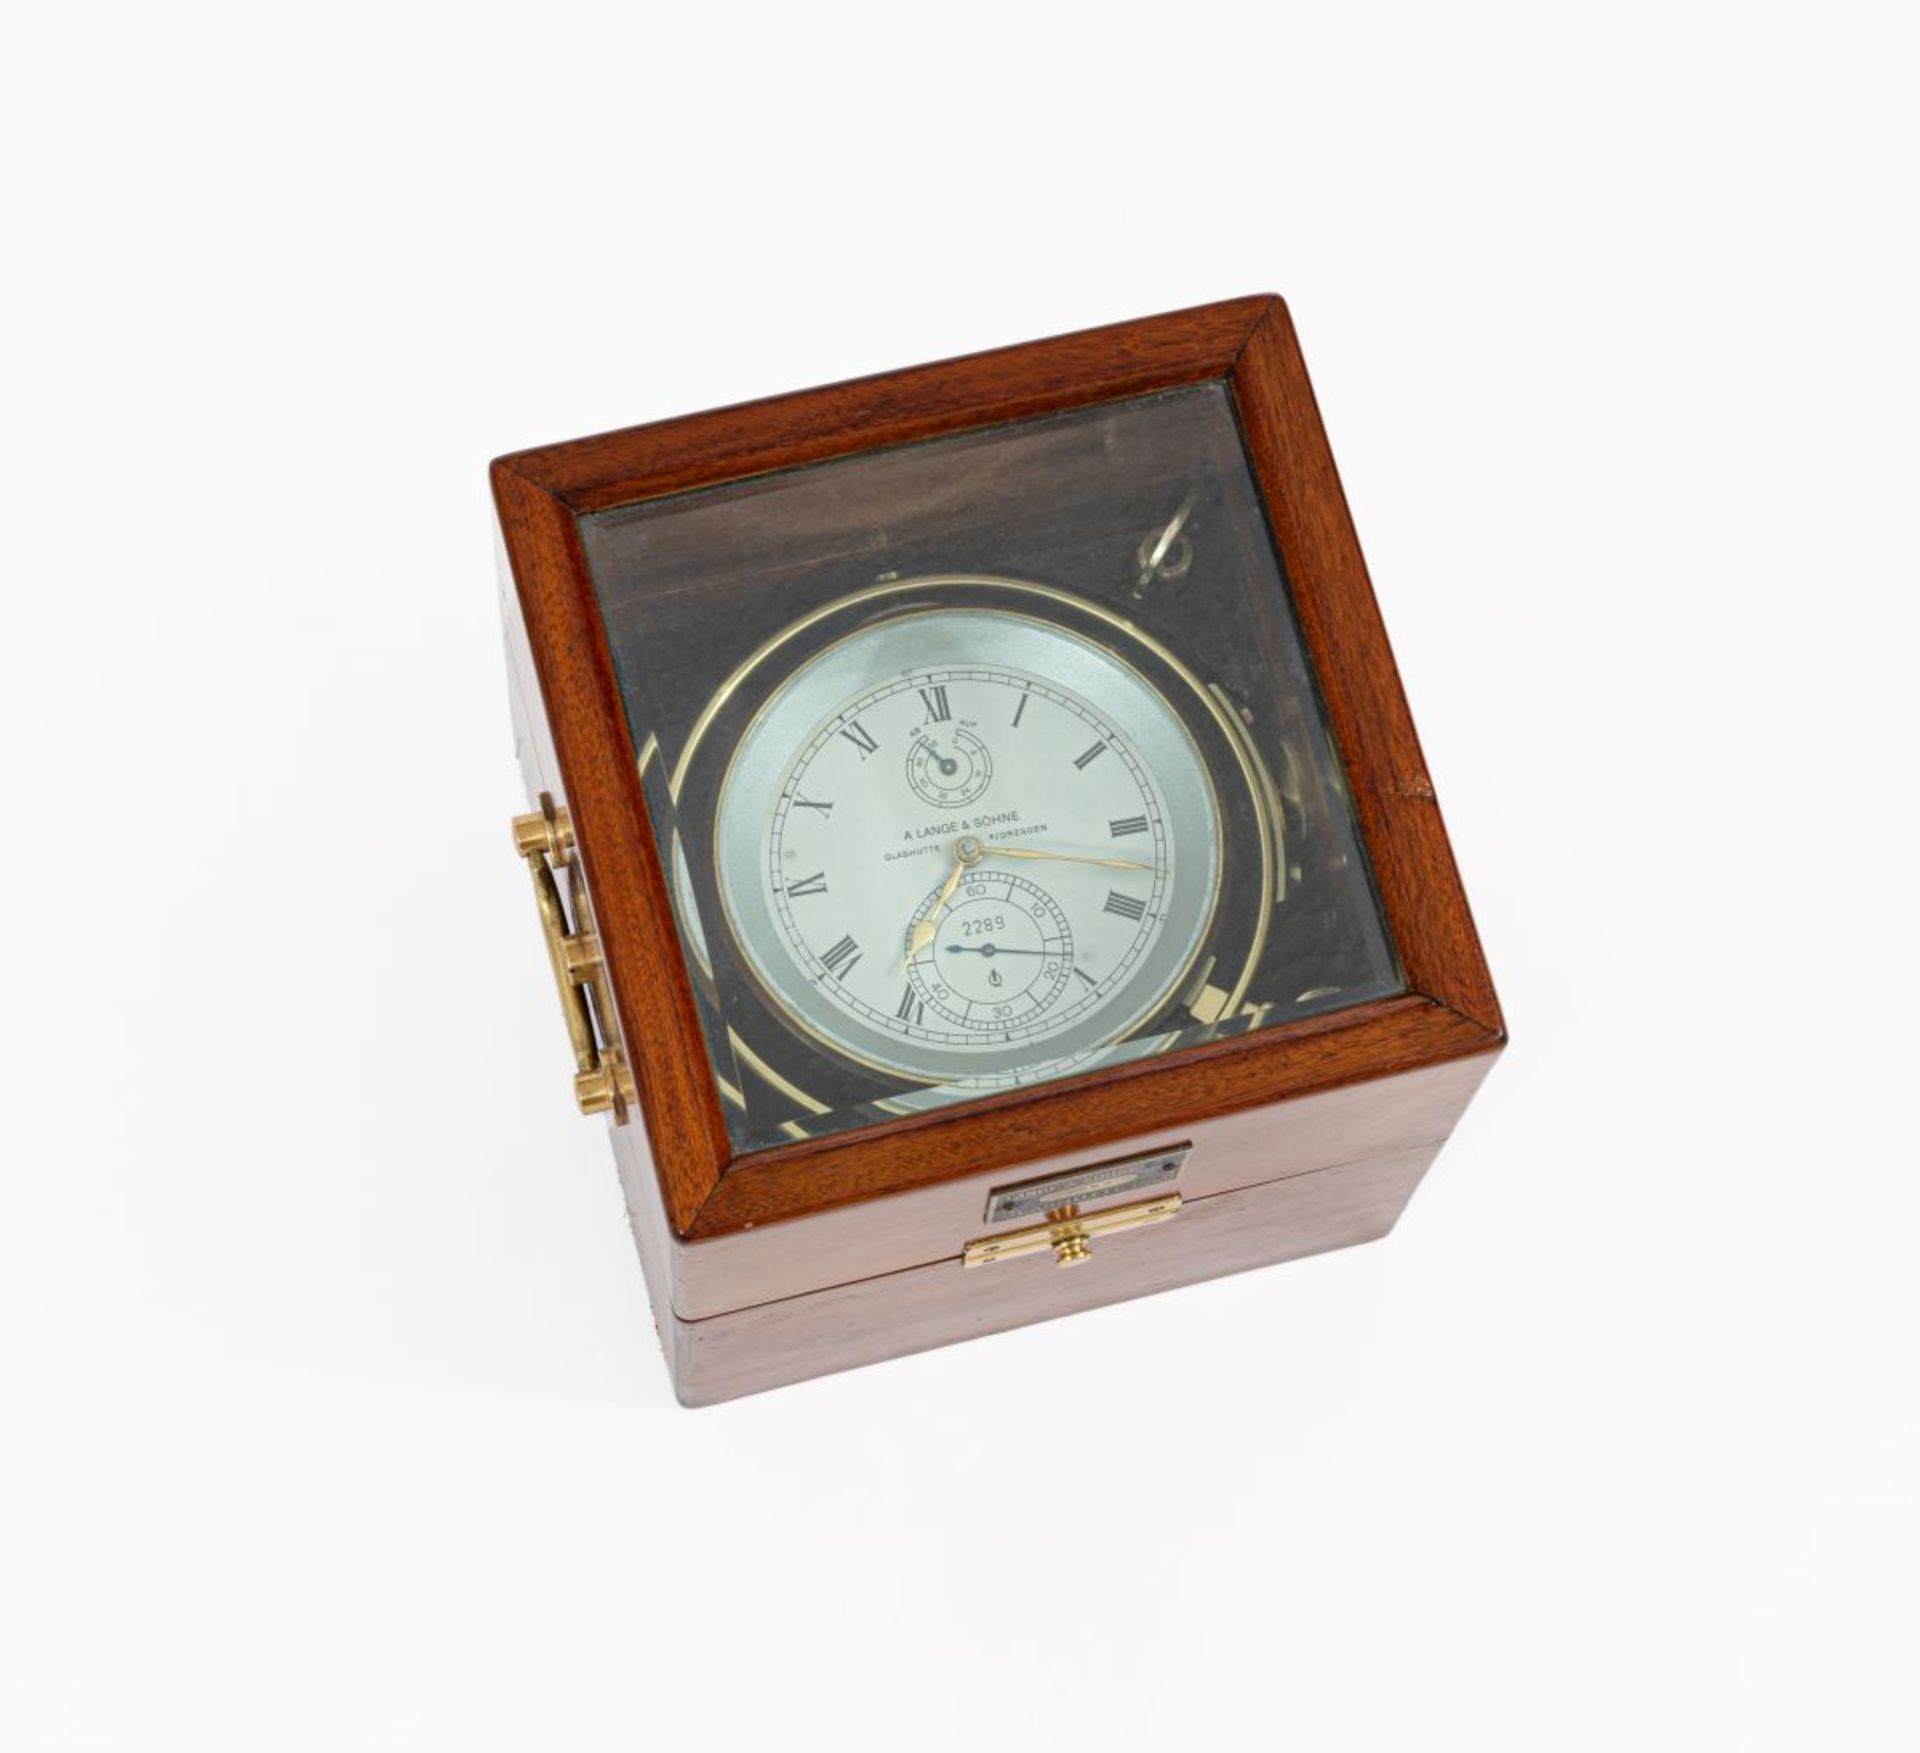 Lange & Söhne, A. est. 1845 in Glashütte. A rare Marine Chronometer. - Image 3 of 3